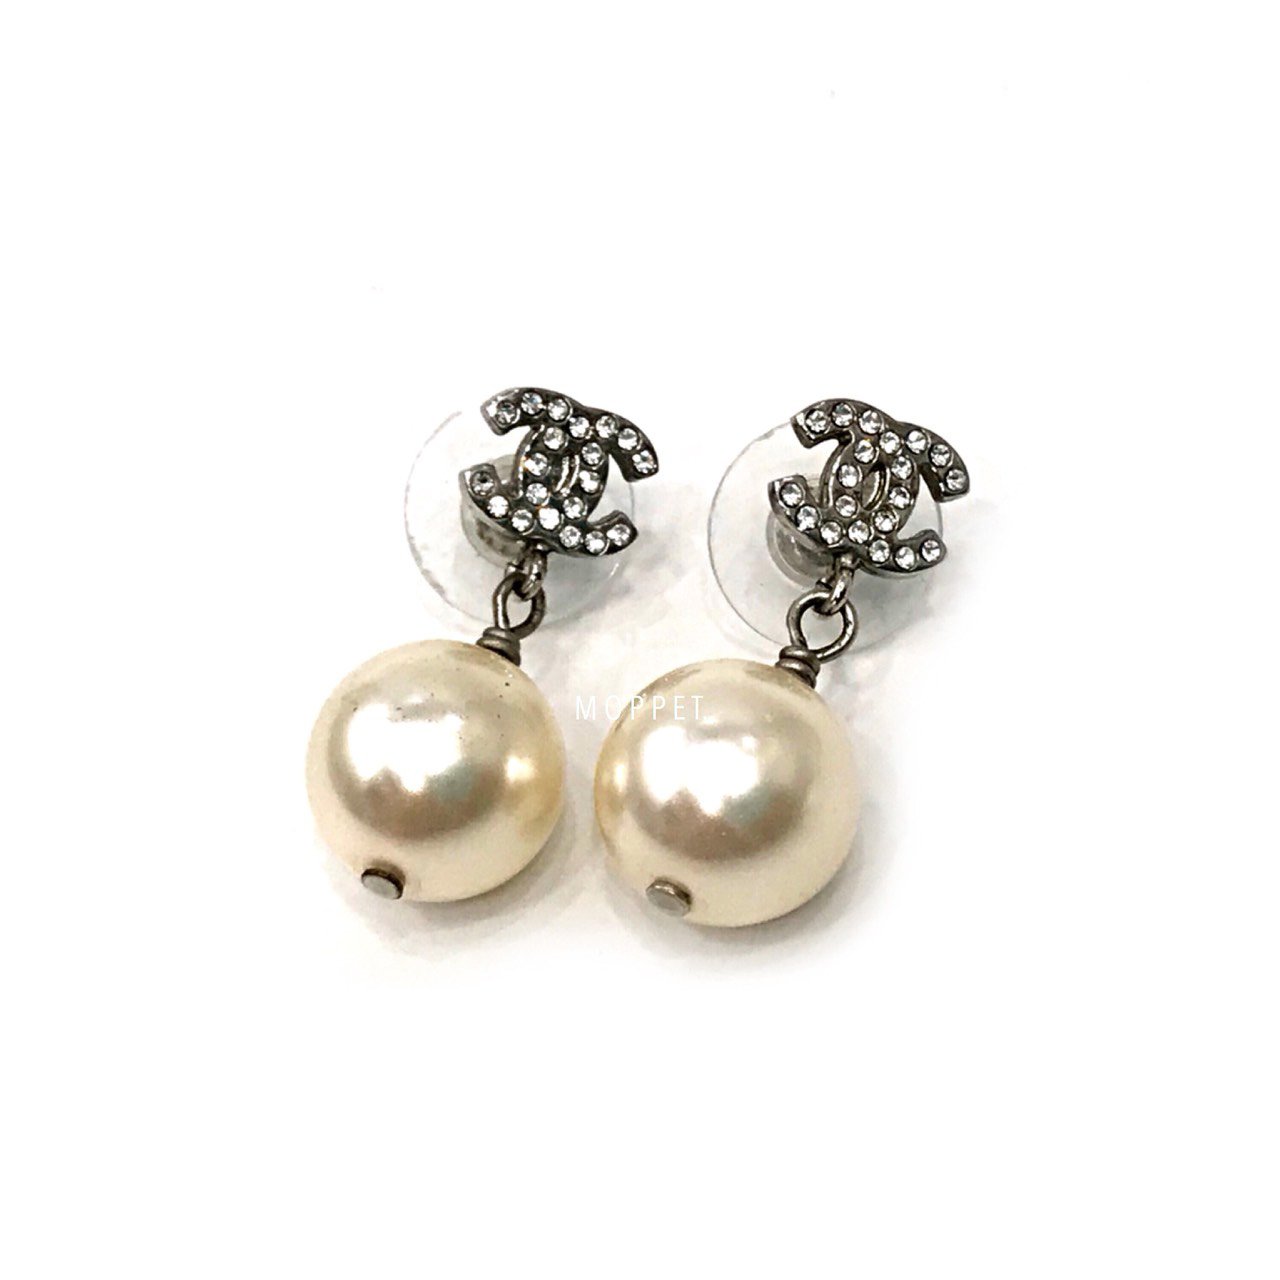 Used Chanel CC Earrings in Pearls/Crystal SHW